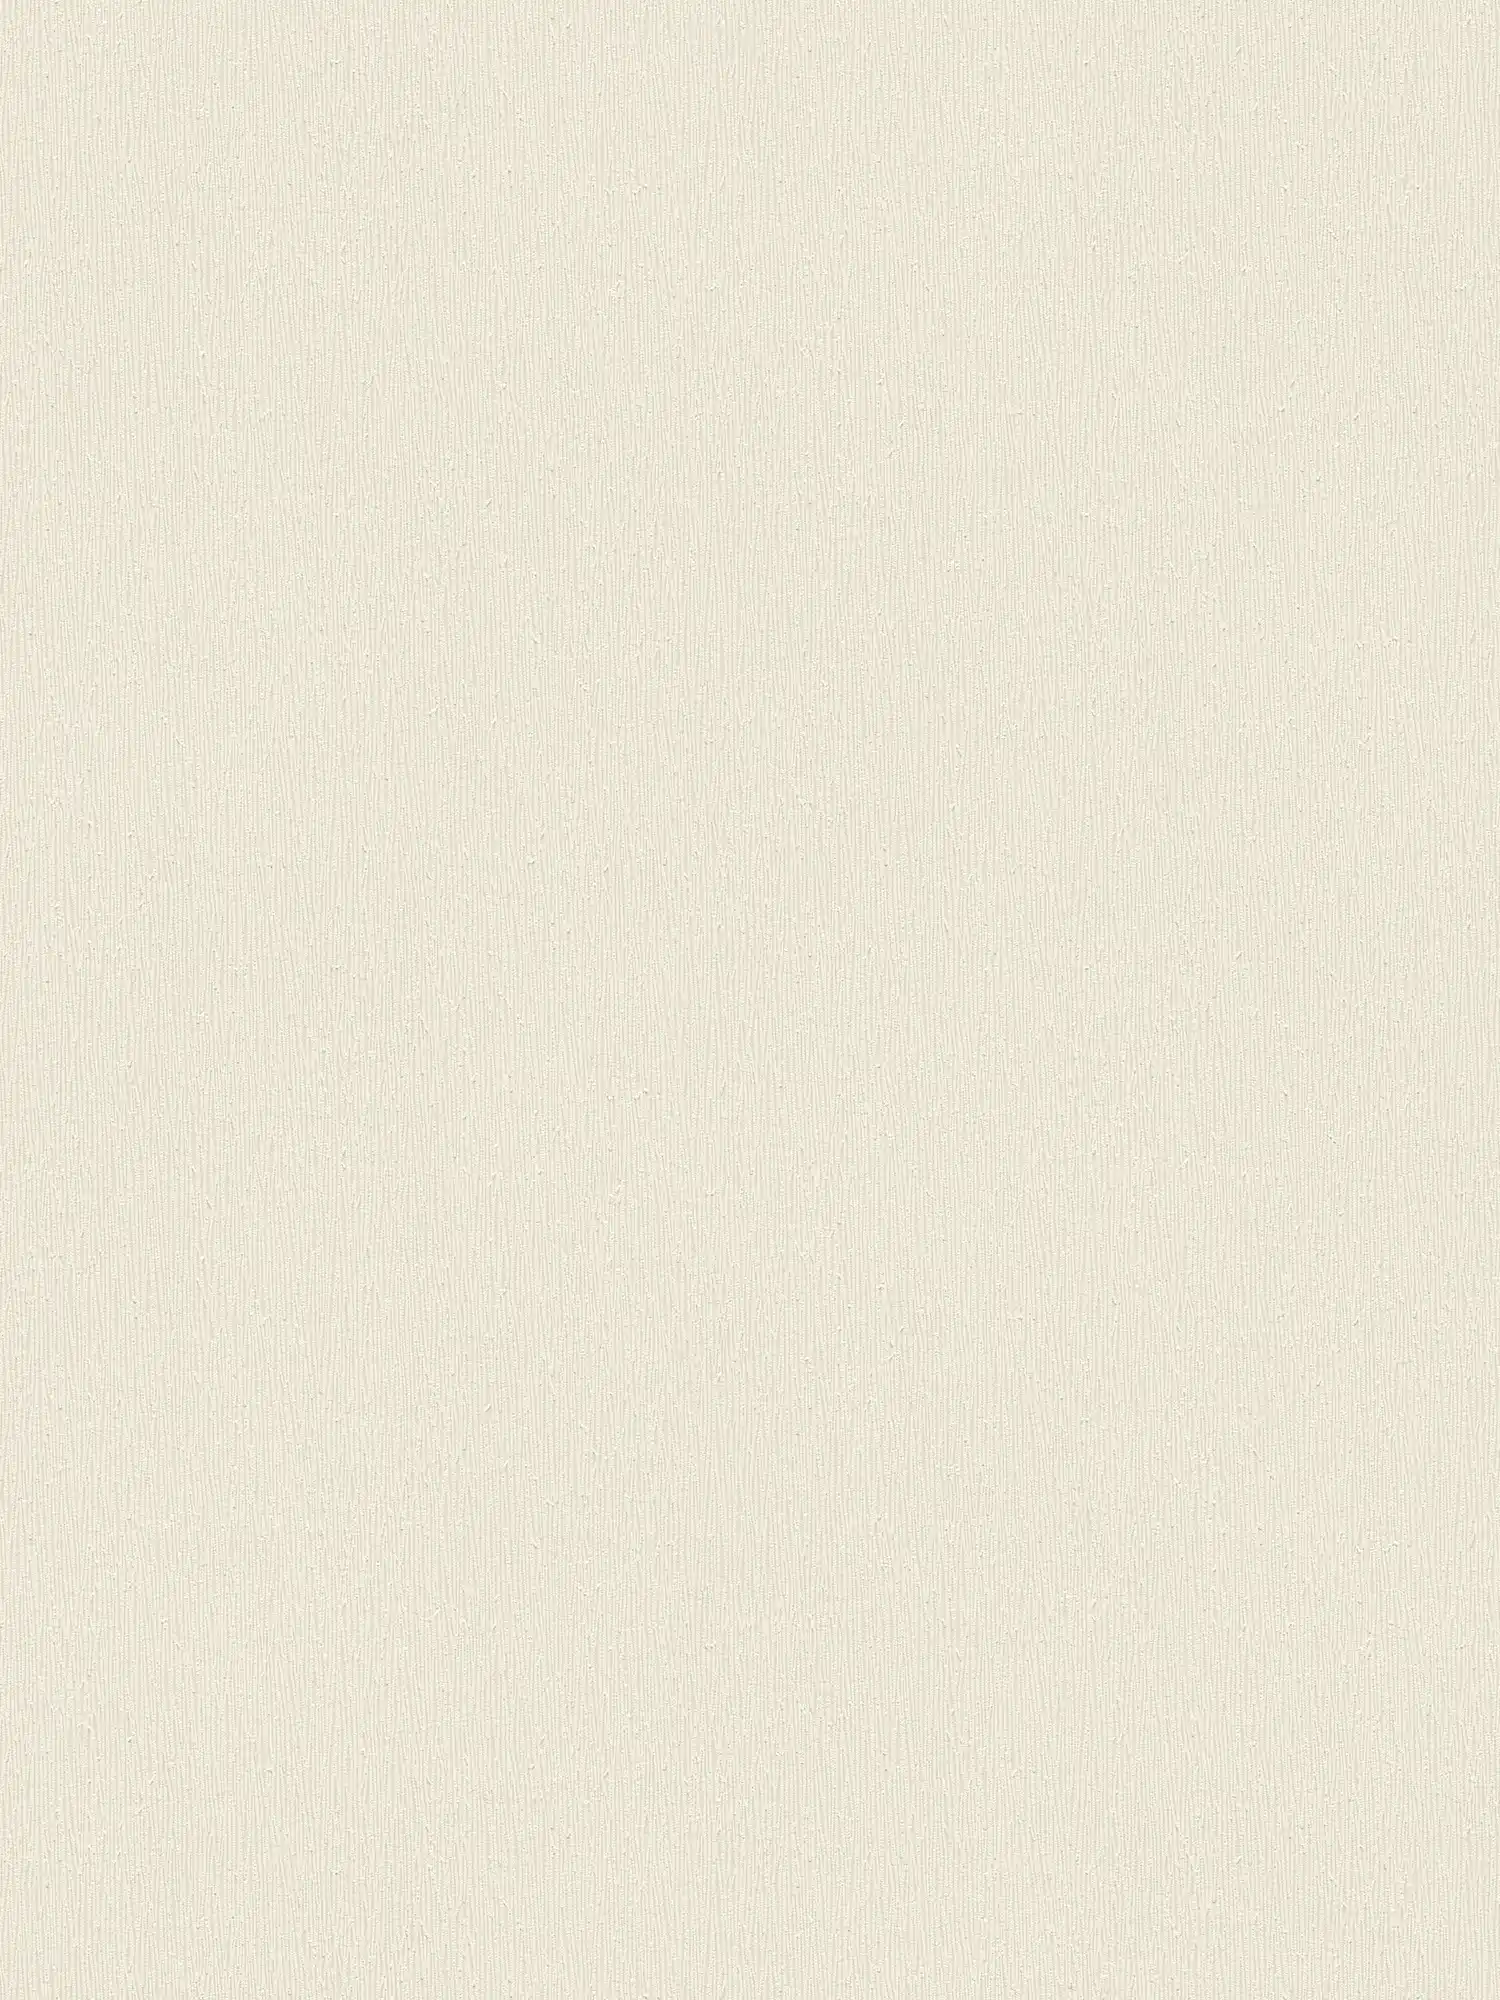 Crème vliesbehang met monochroom structuurdesign - crème, wit
